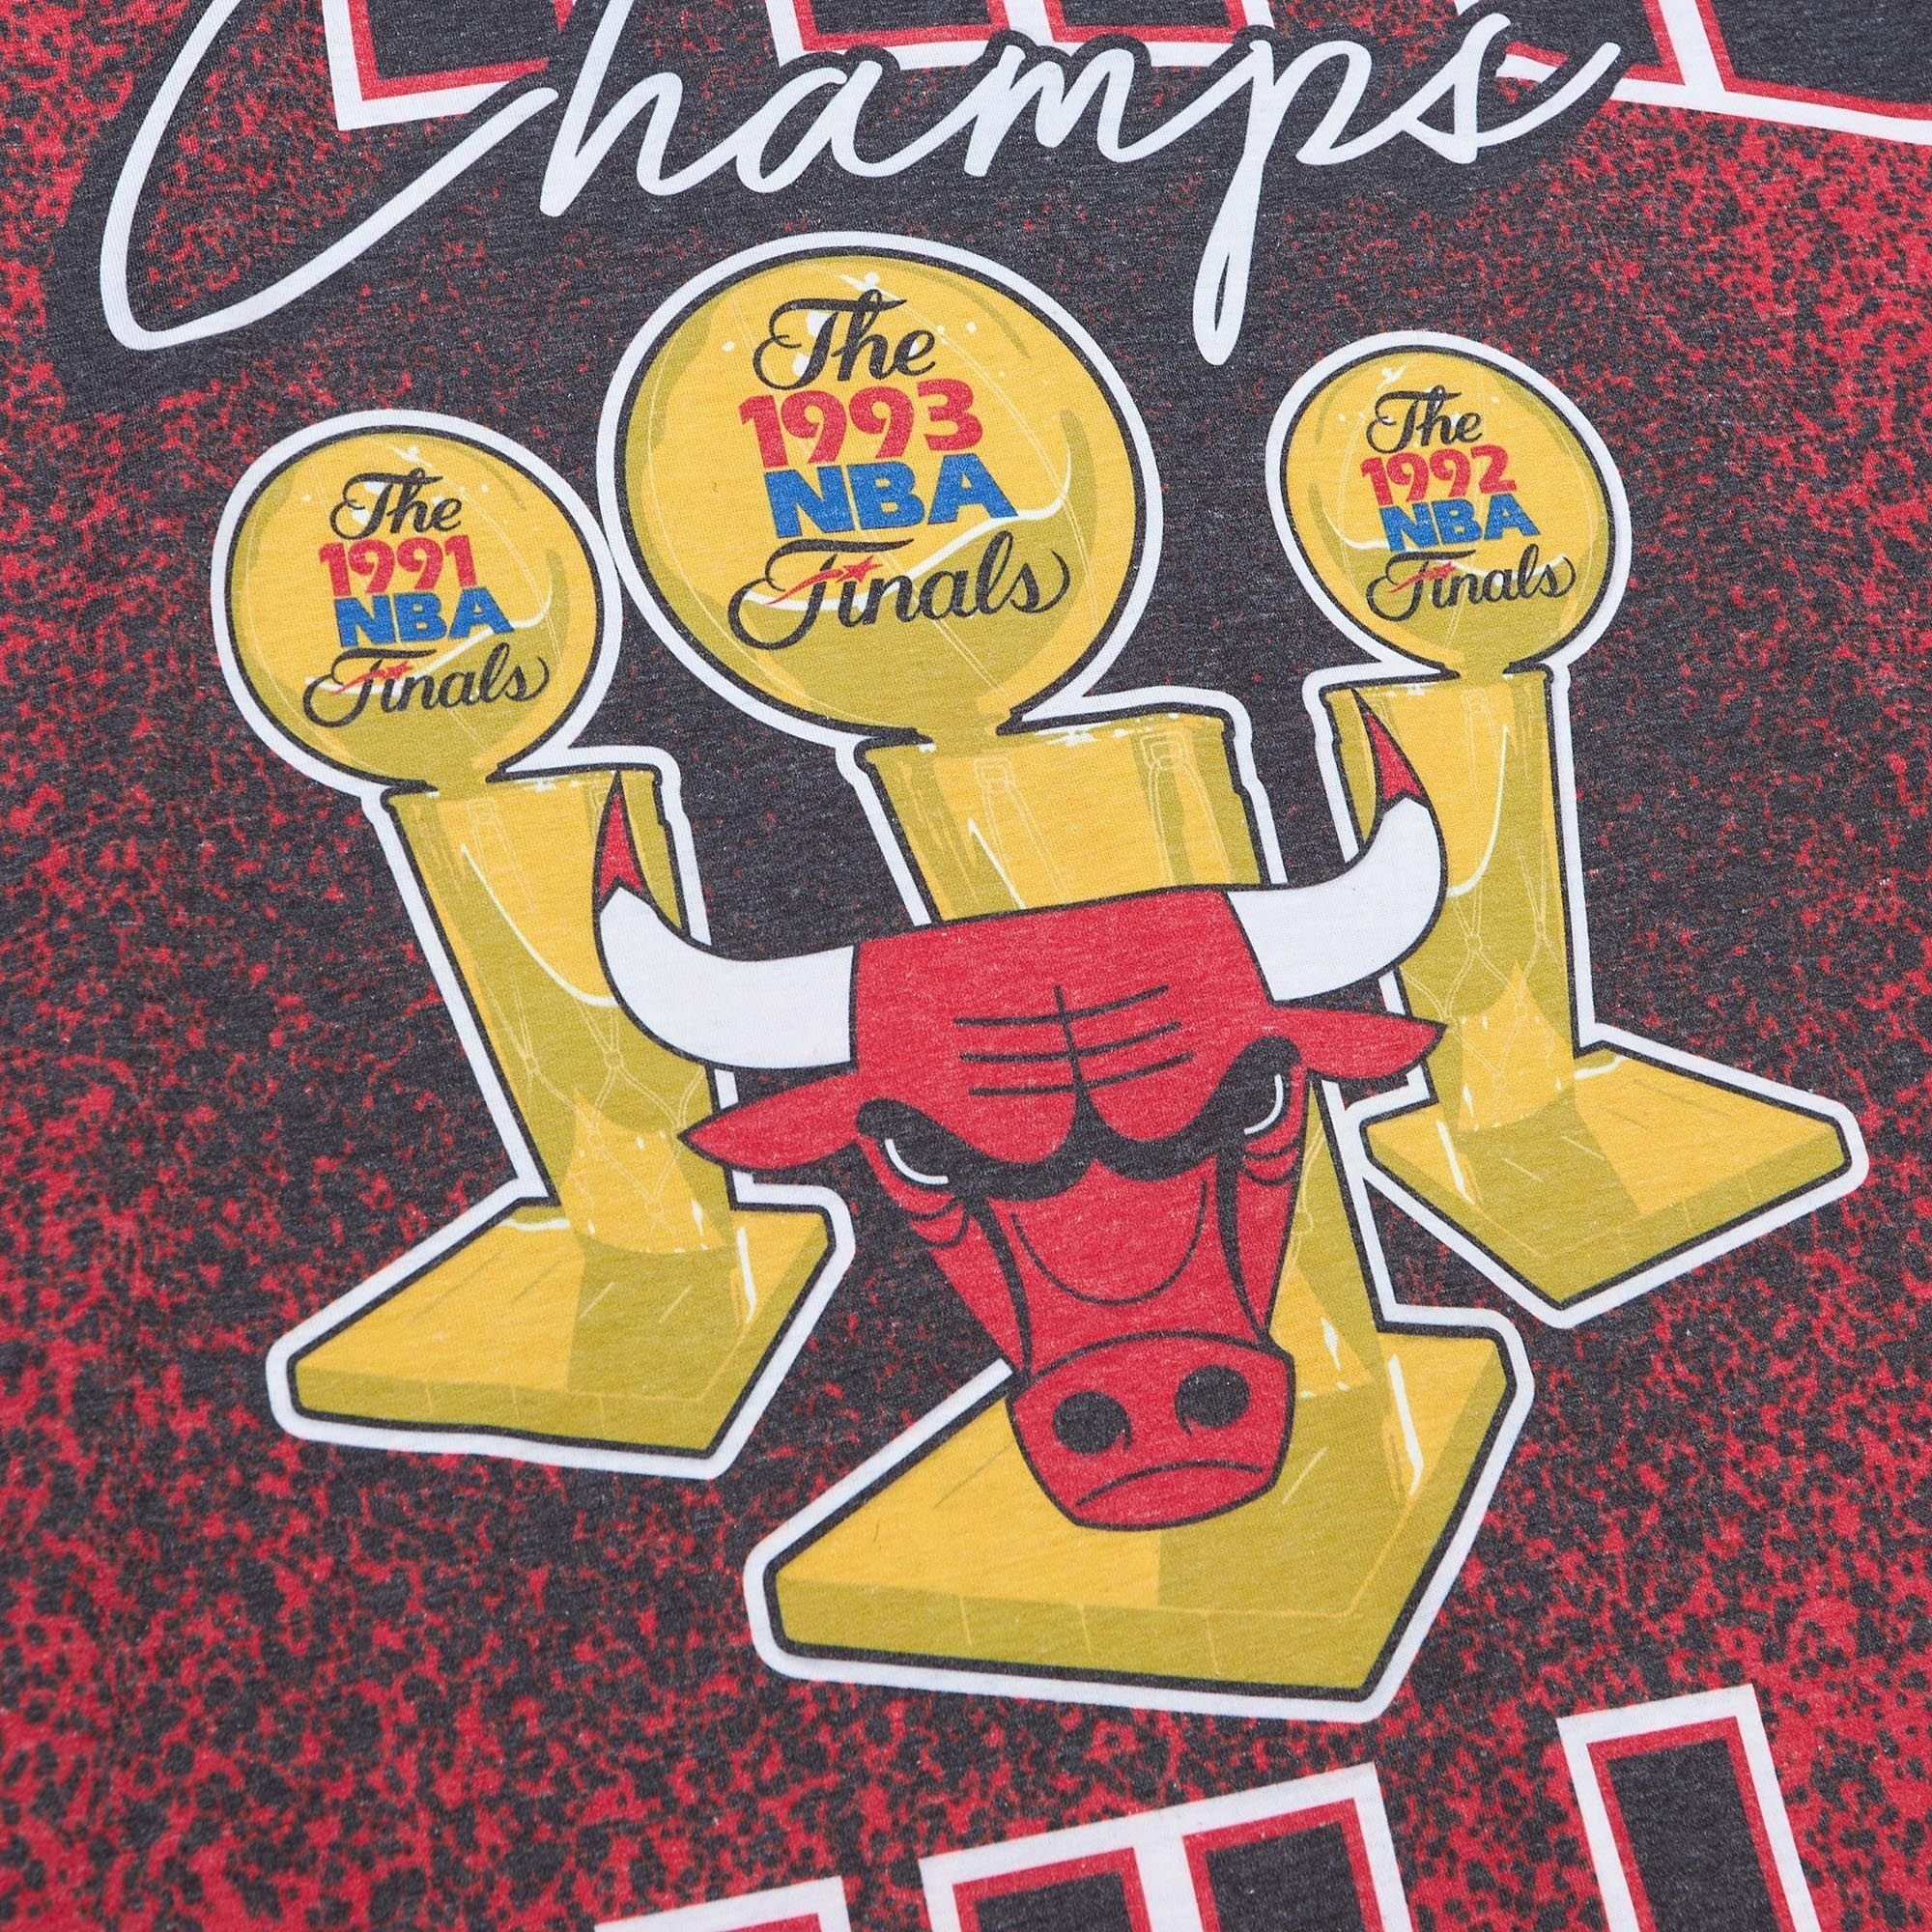 CHAMP & Mitchell Chicago Print-Shirt Ness CITY Bulls